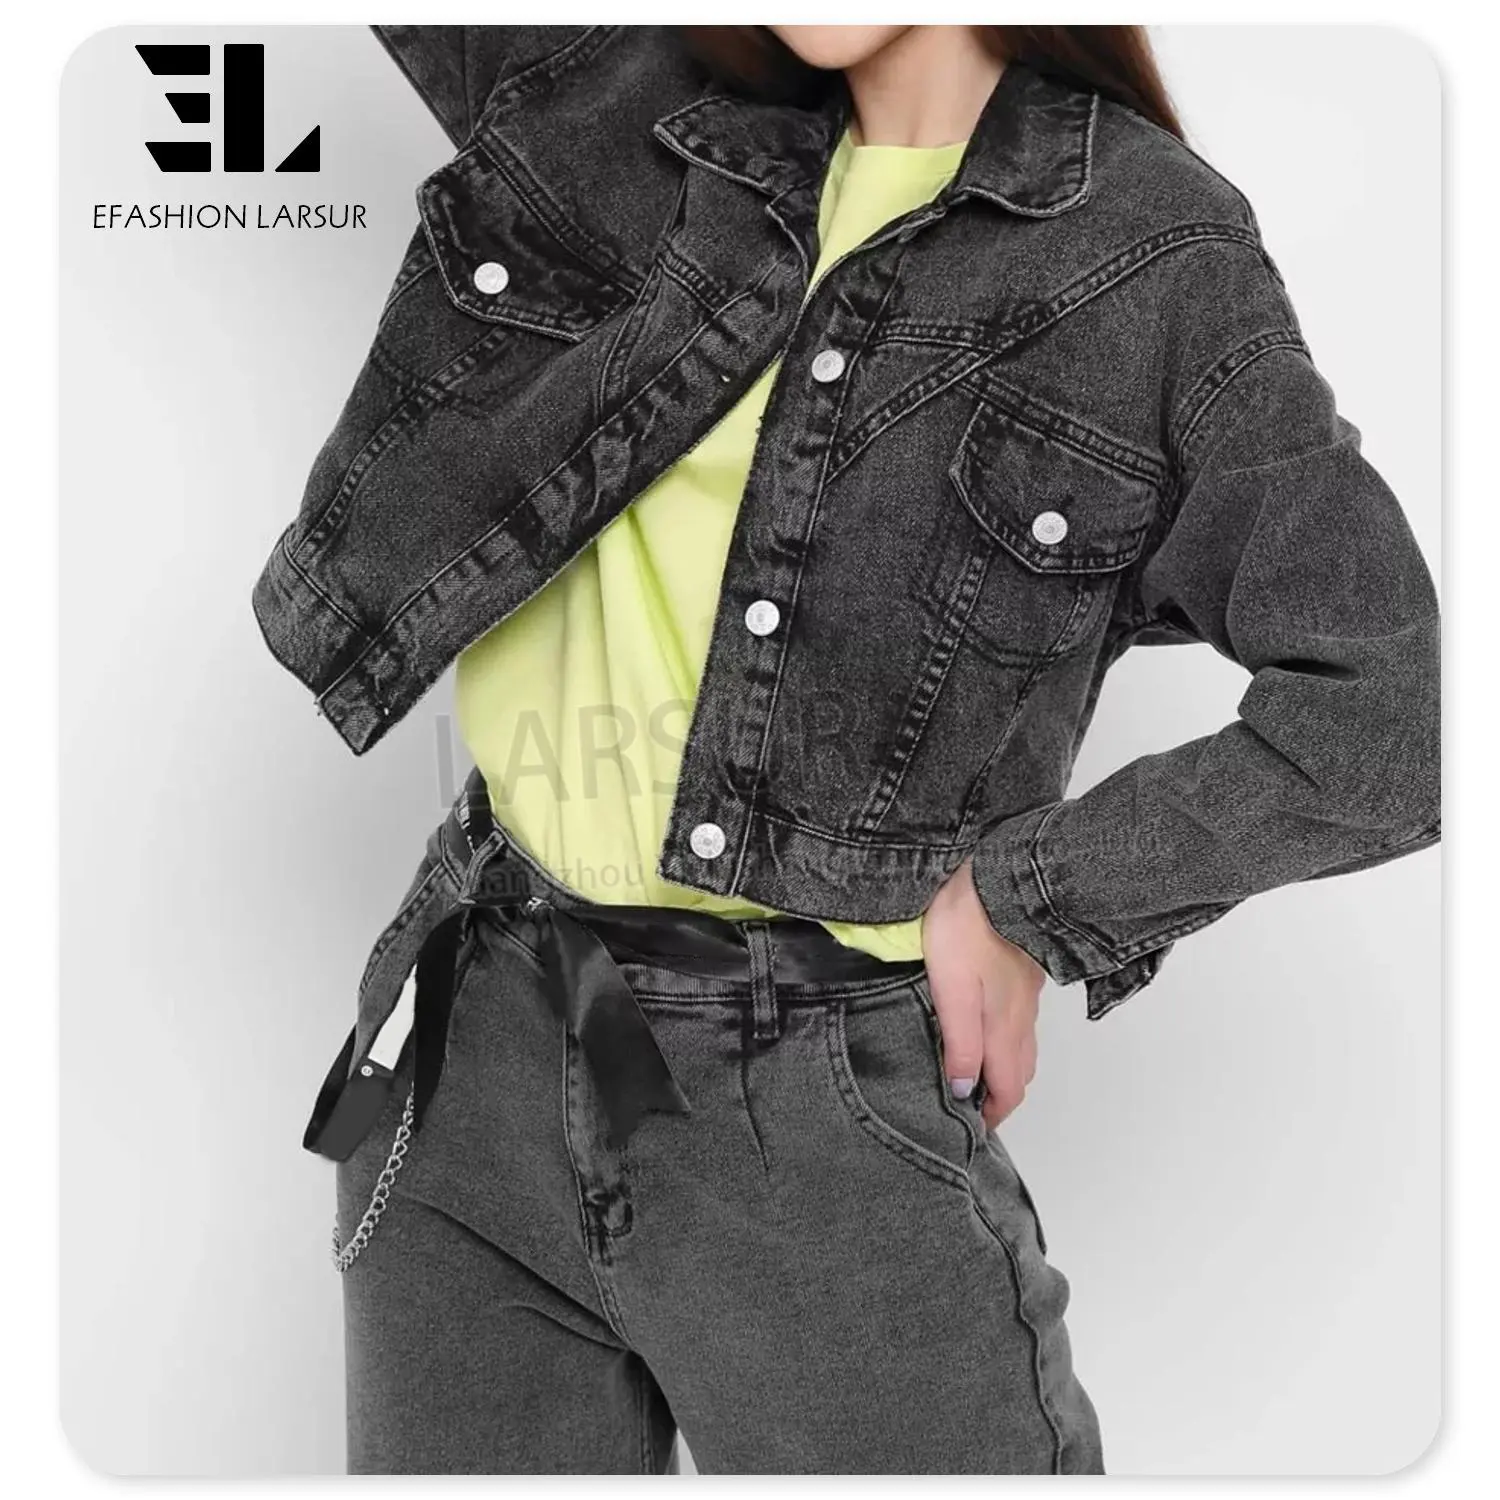 LARSUR xintang guangzhou denim jeans giacca produttore di fabbrica giacca di jeans corta lavata personalizzata donna donna giacca di jeans corta